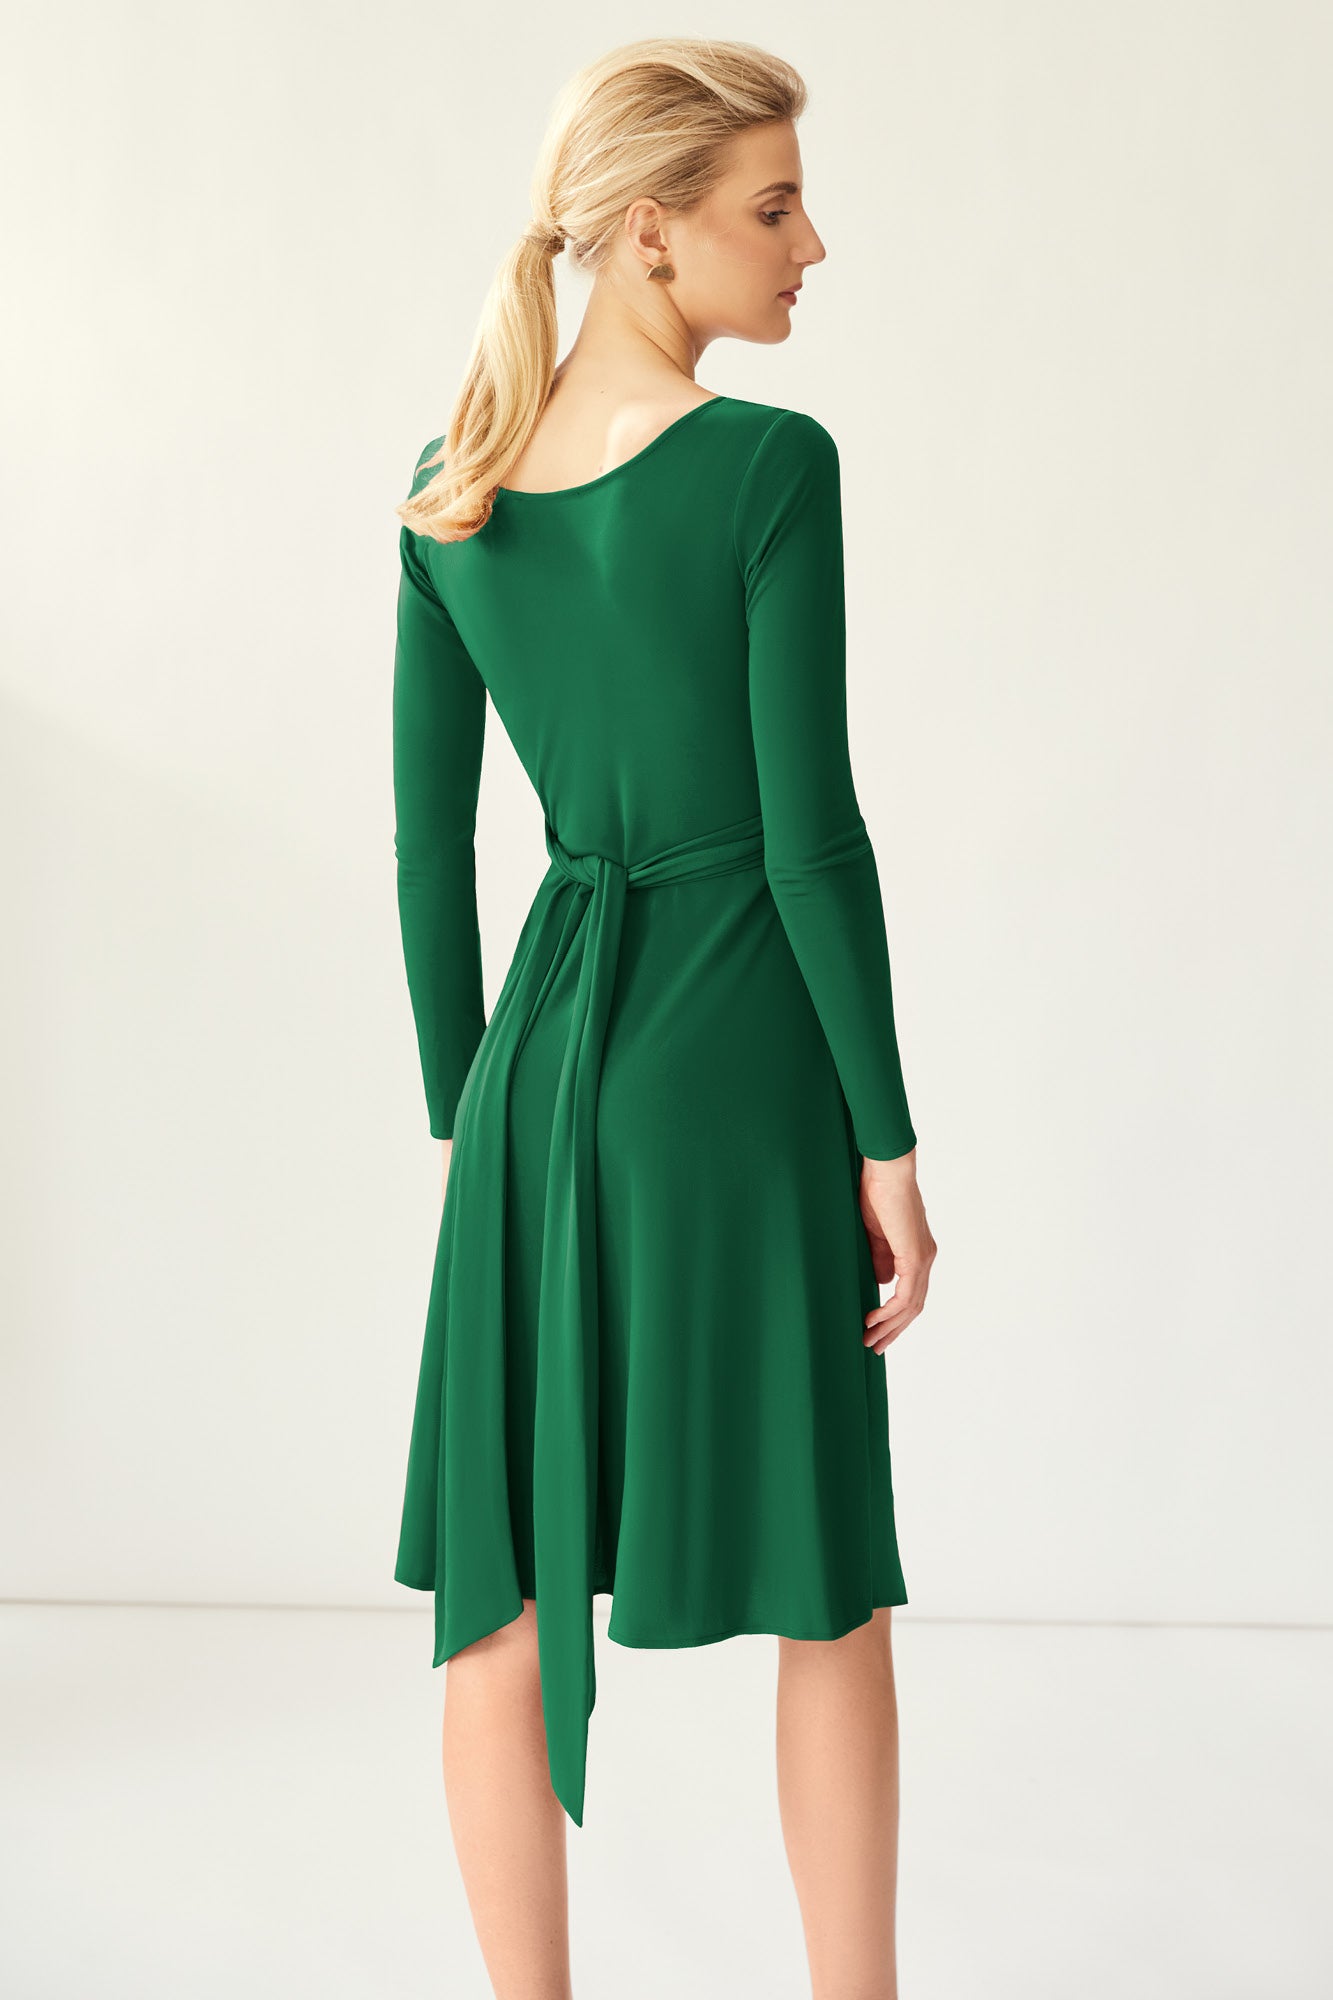 Tennyson Kelly Green Dress